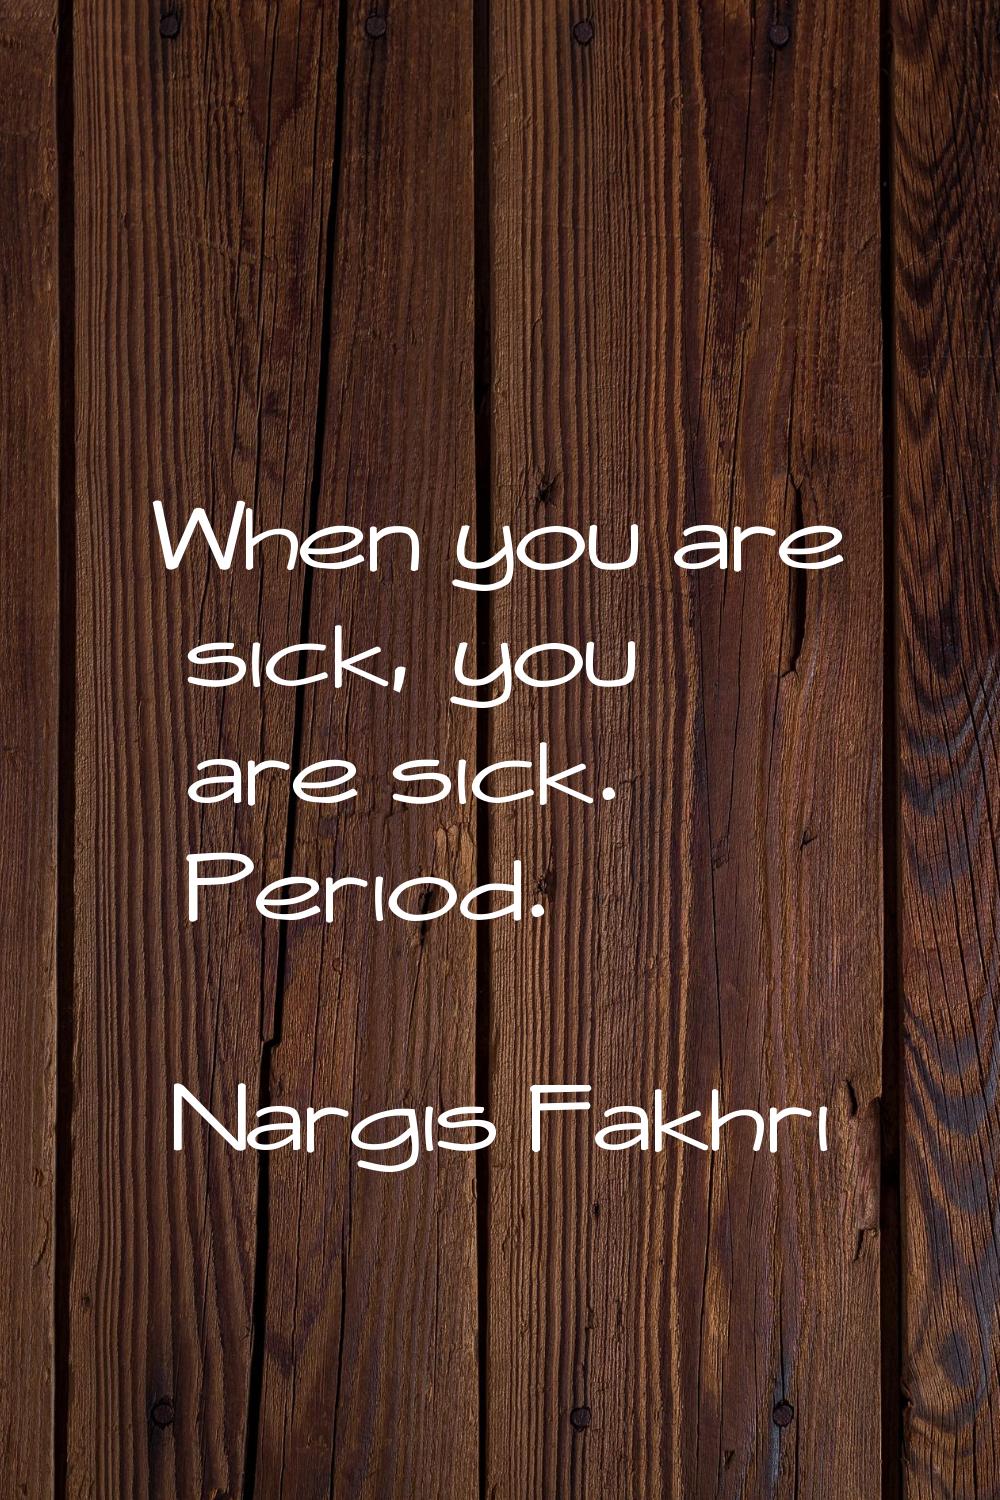 When you are sick, you are sick. Period.